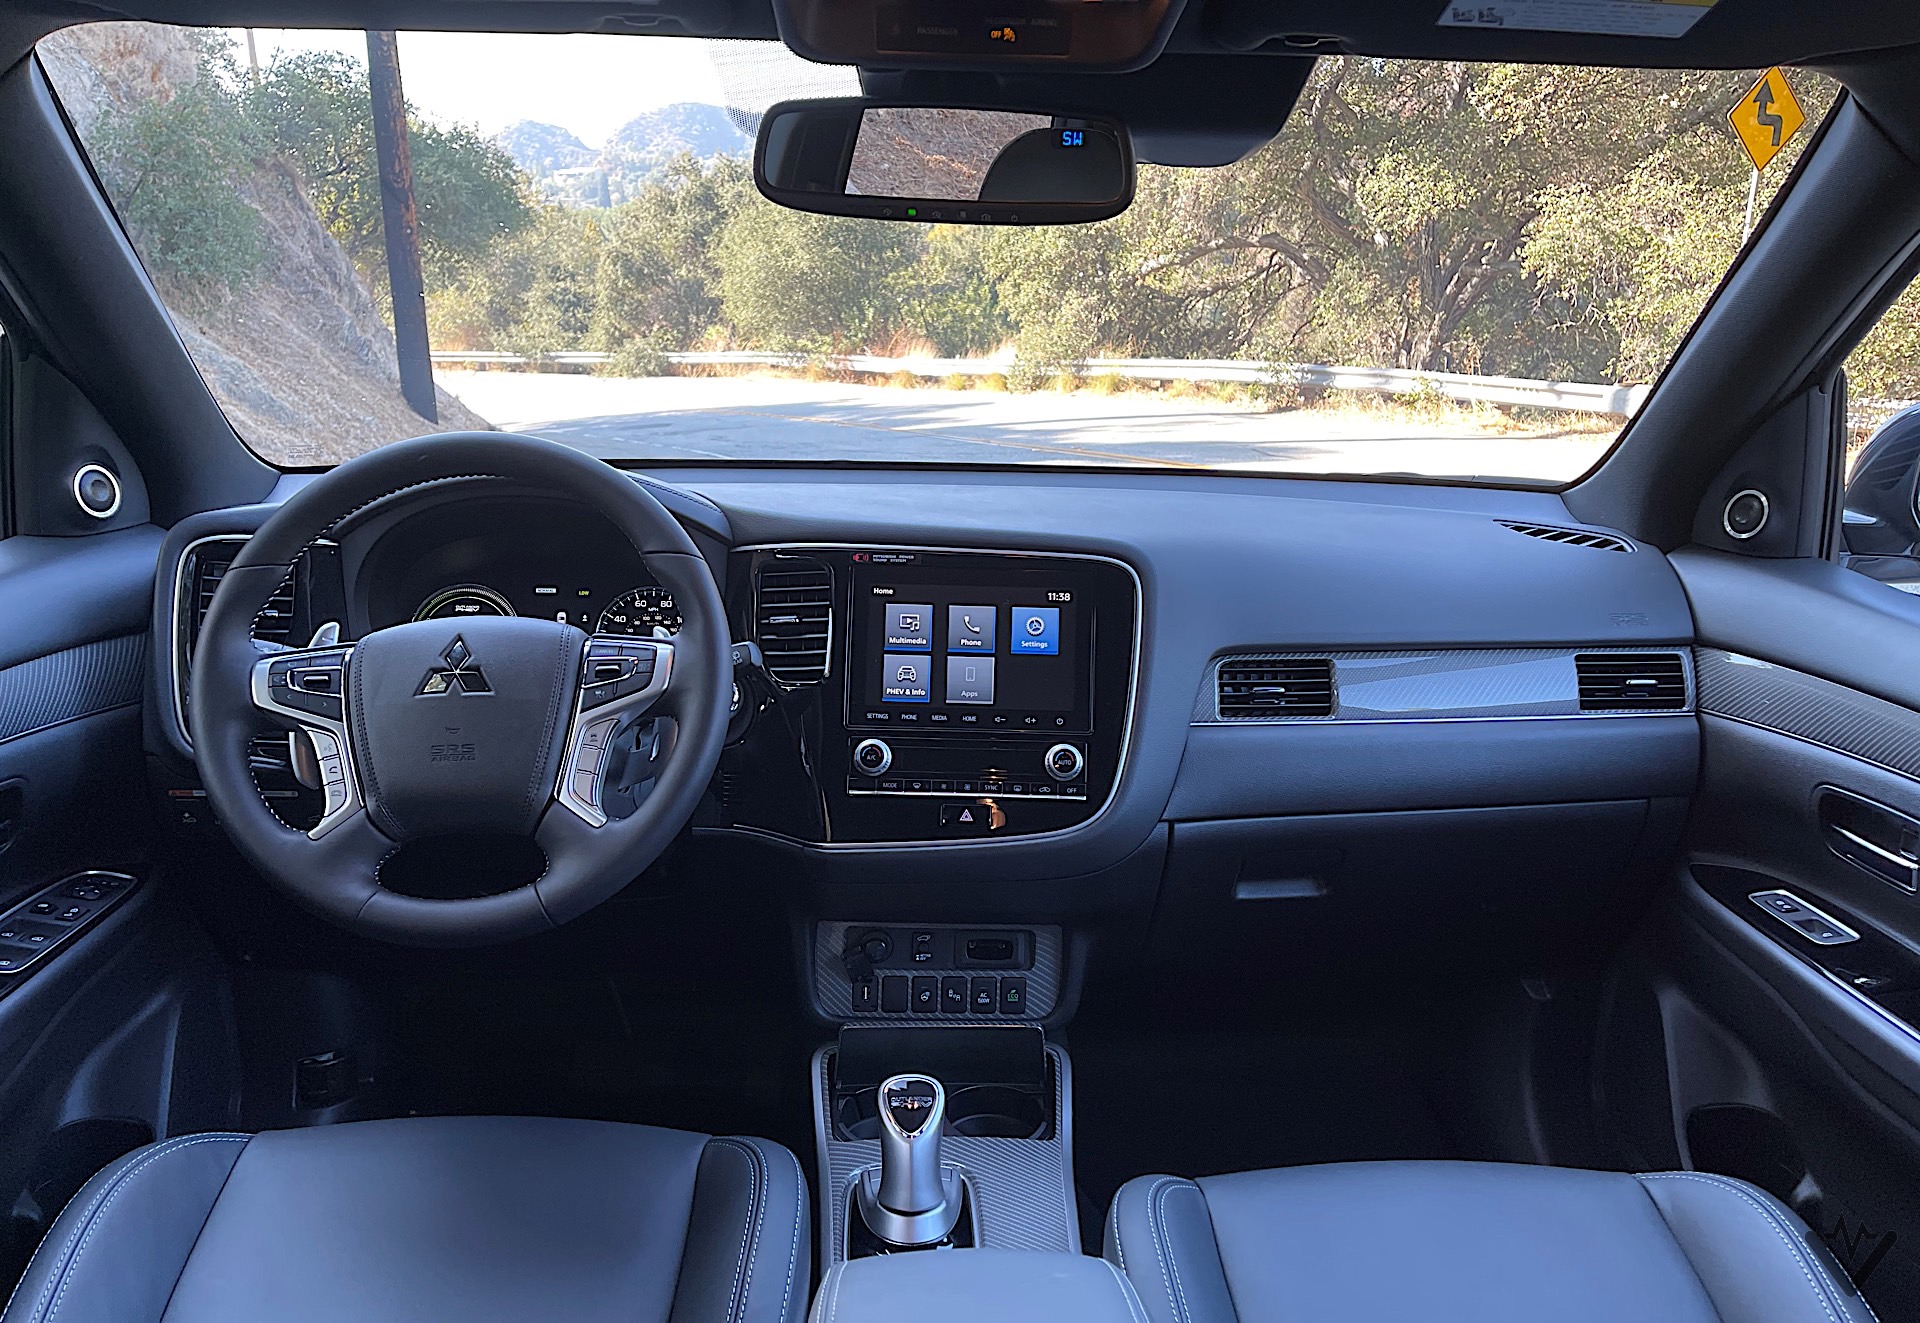 2020 Mitsubishi Outlander PHEV review: One of the original plug-in SUVs -  EV Pulse